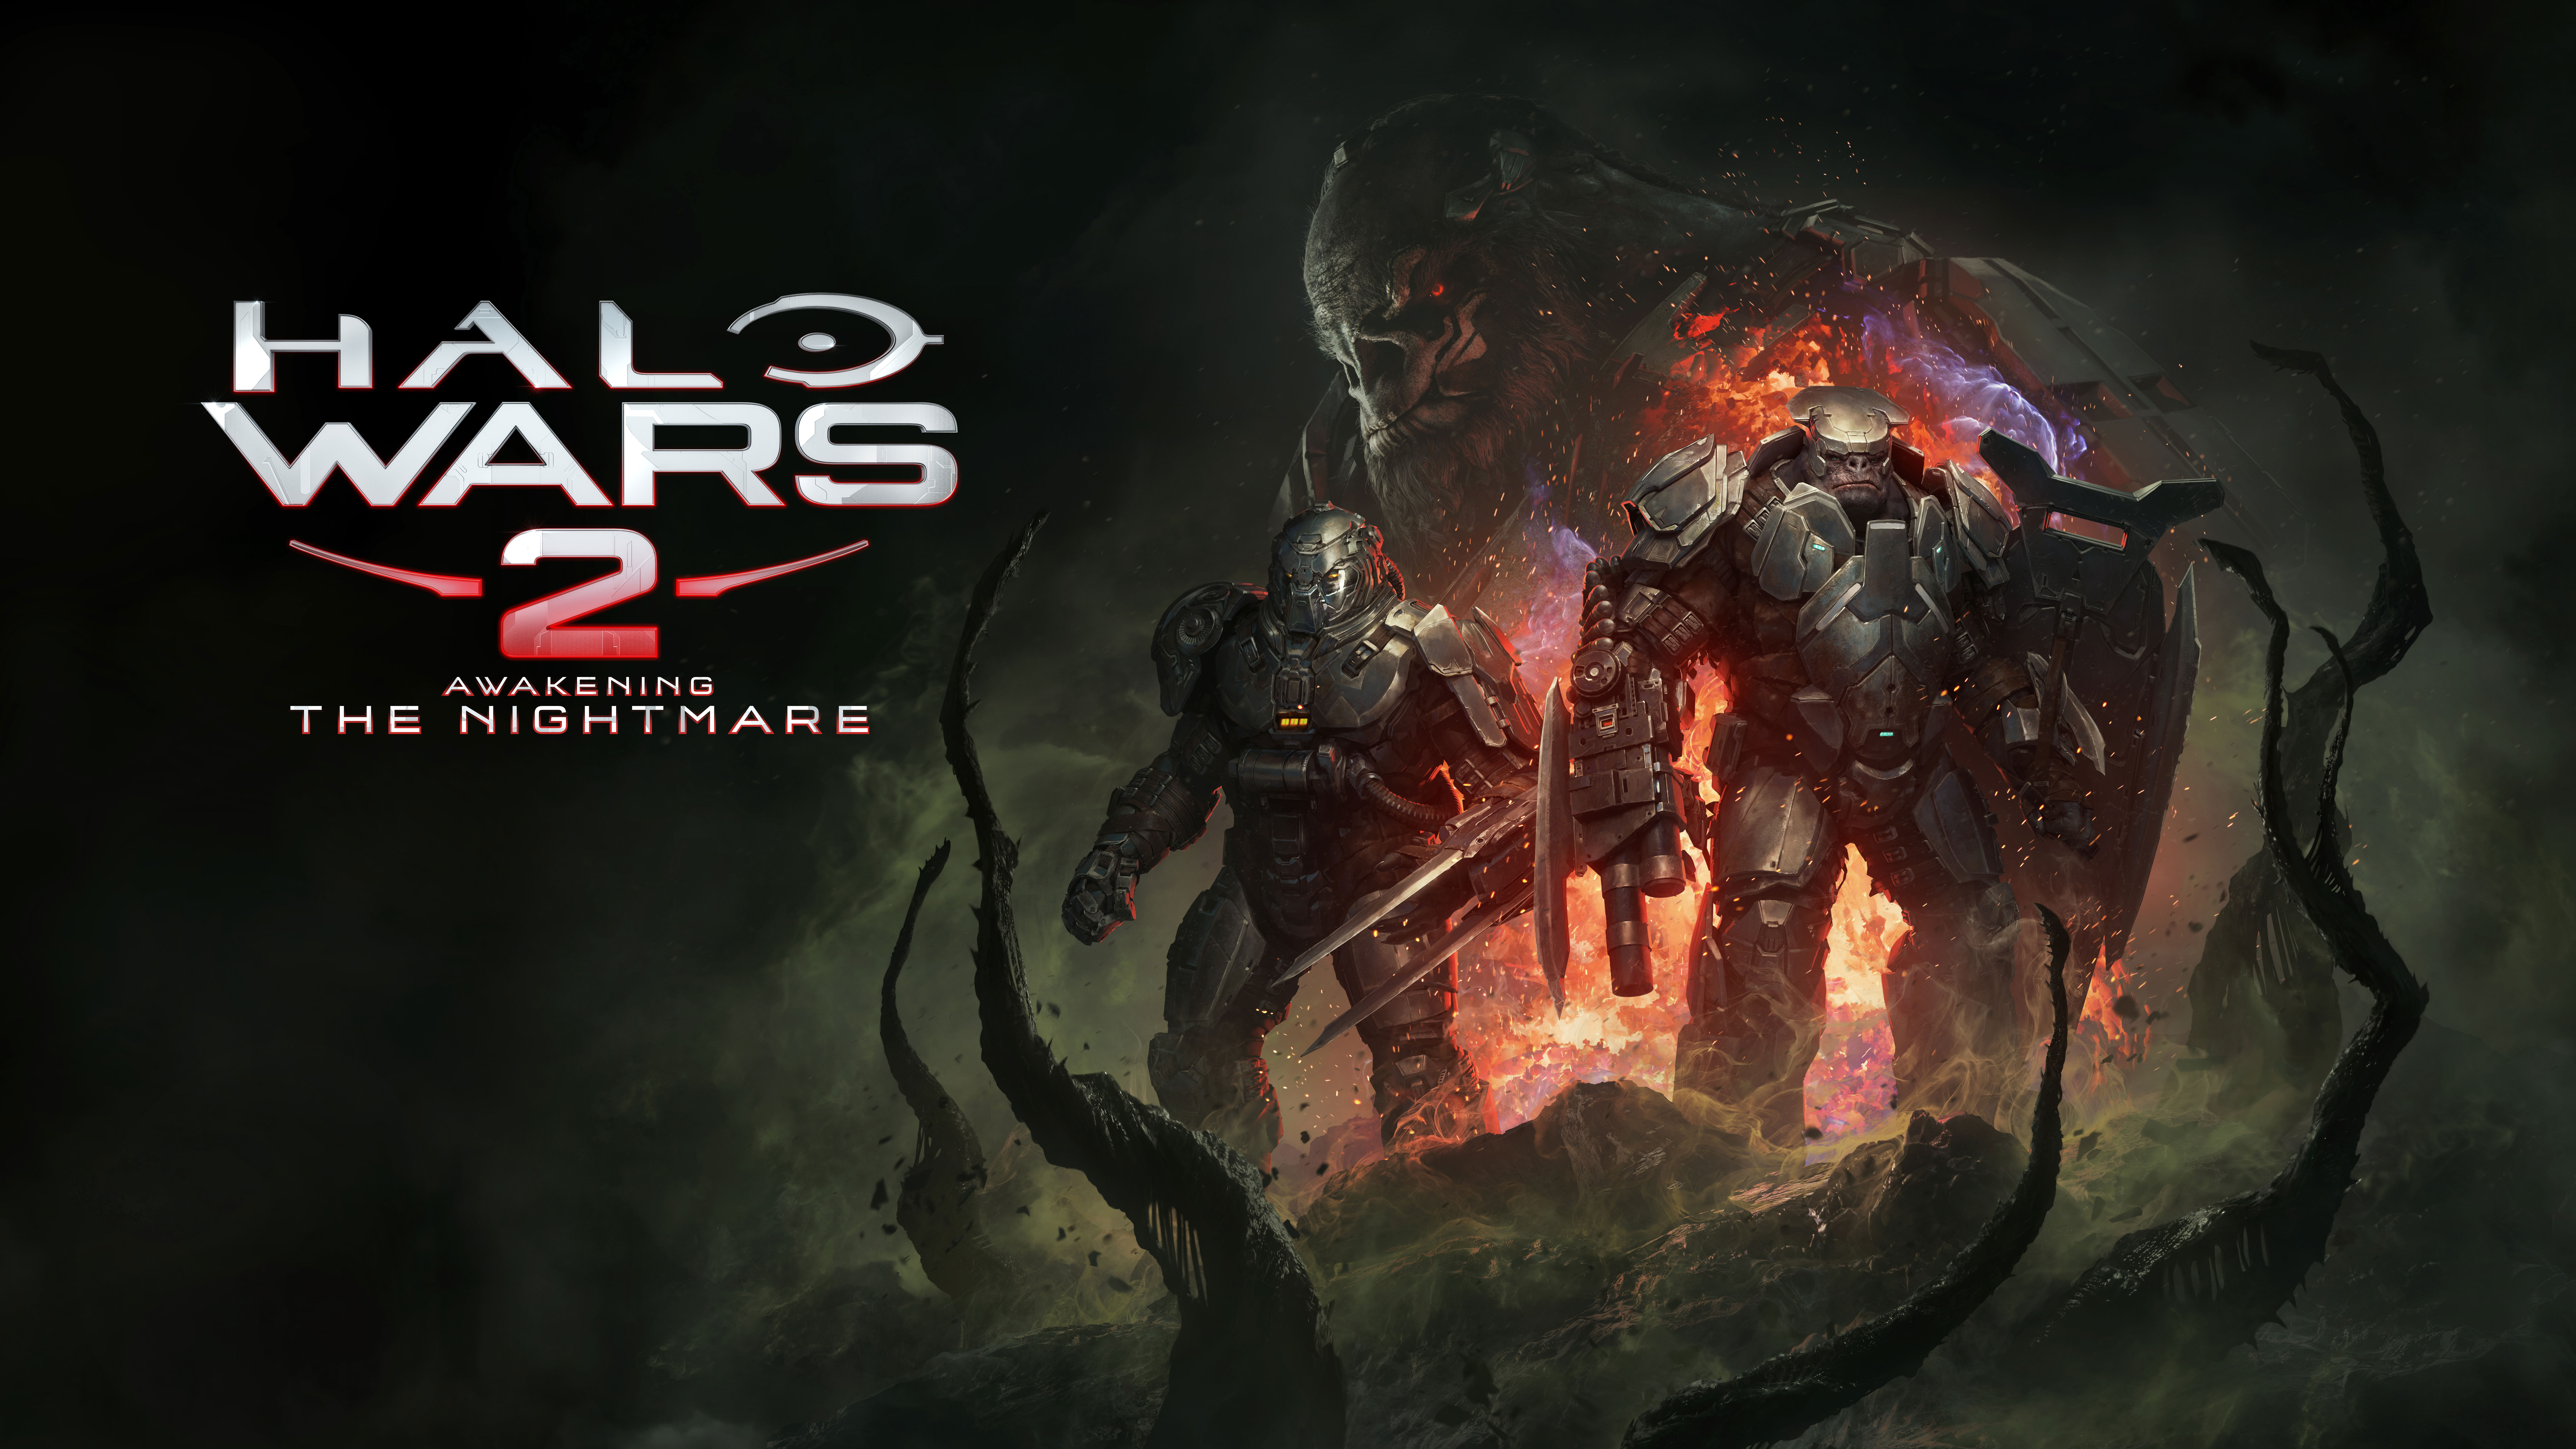 halo wars 2 wallpaper,action adventure game,pc game,cg artwork,darkness,graphic design